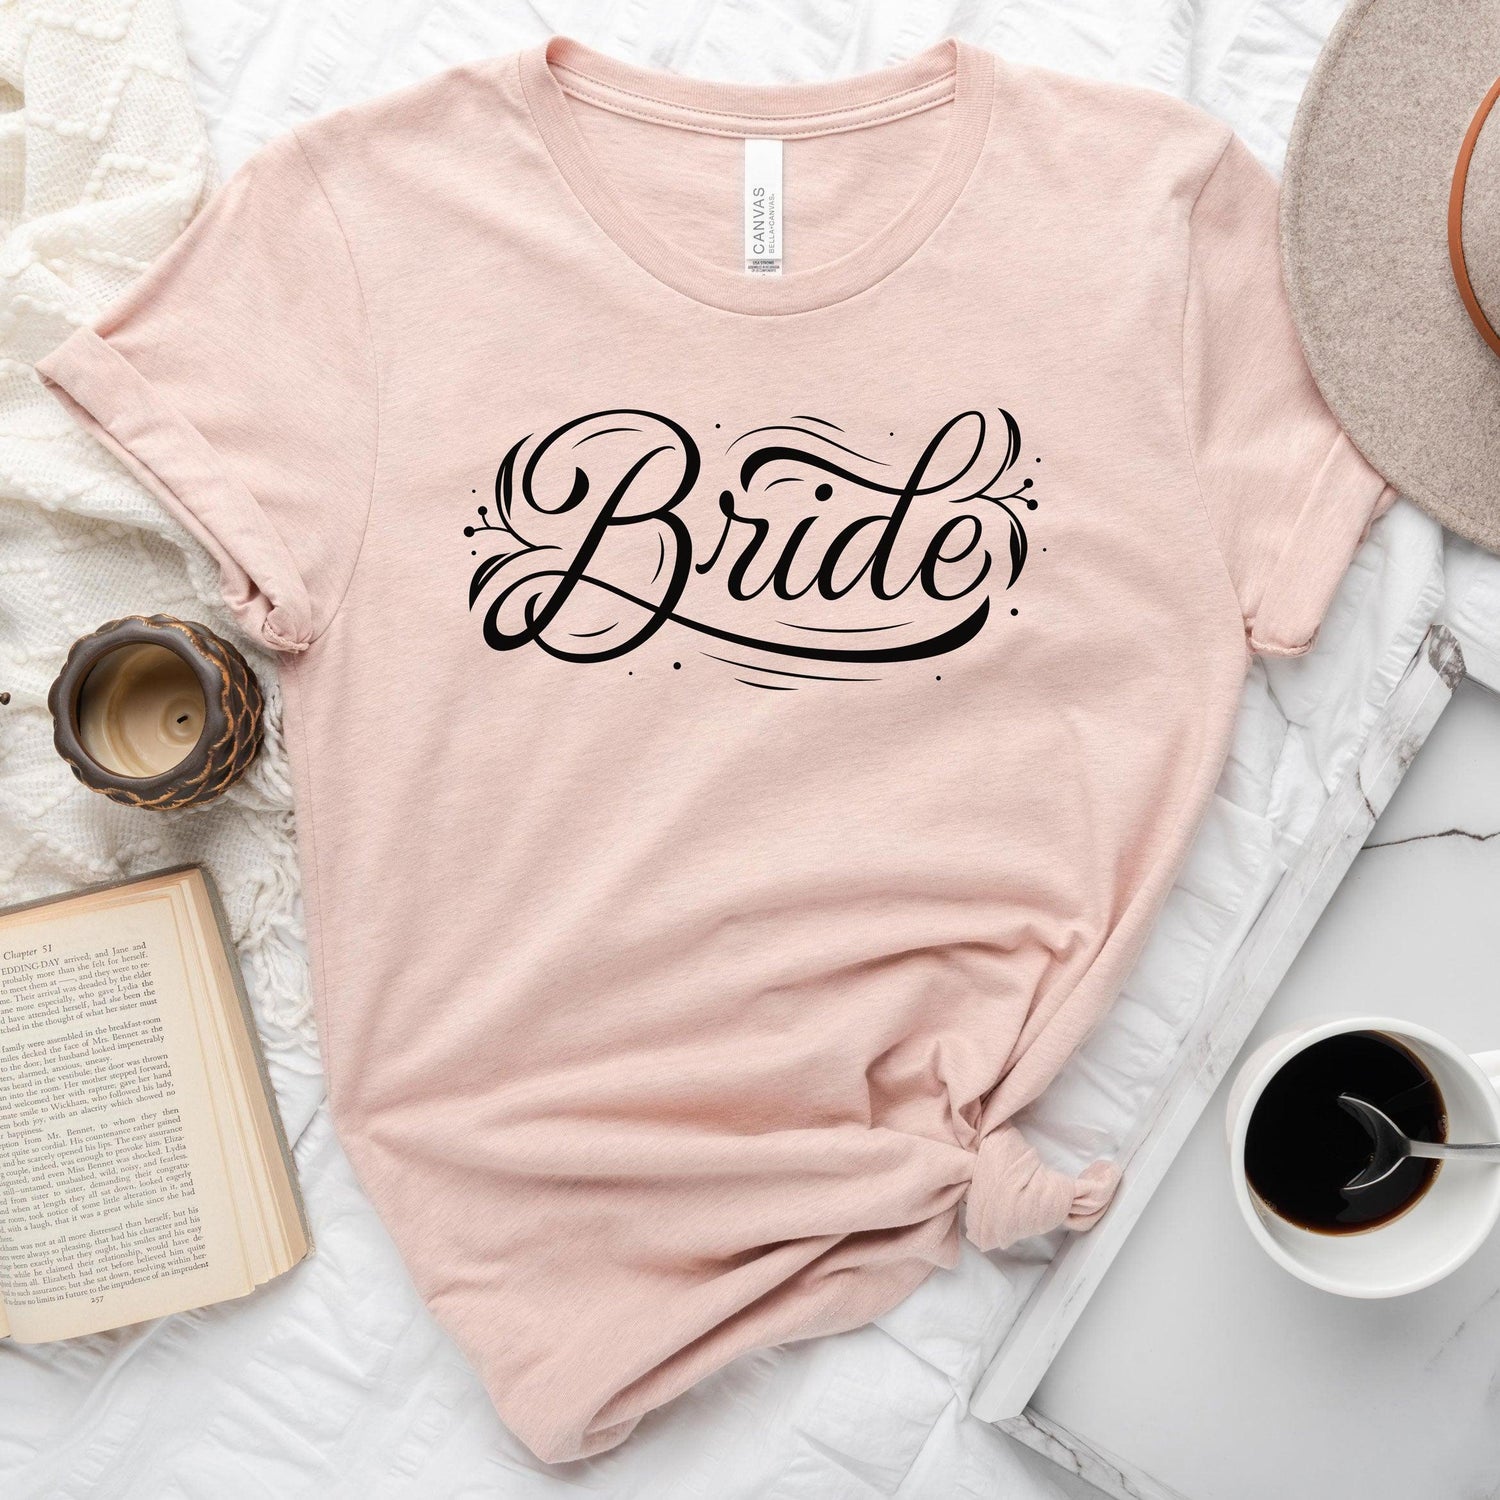 Bride Wedding Short-Sleeve Tee - Plus Sizes Available! by Oaklynn Lane